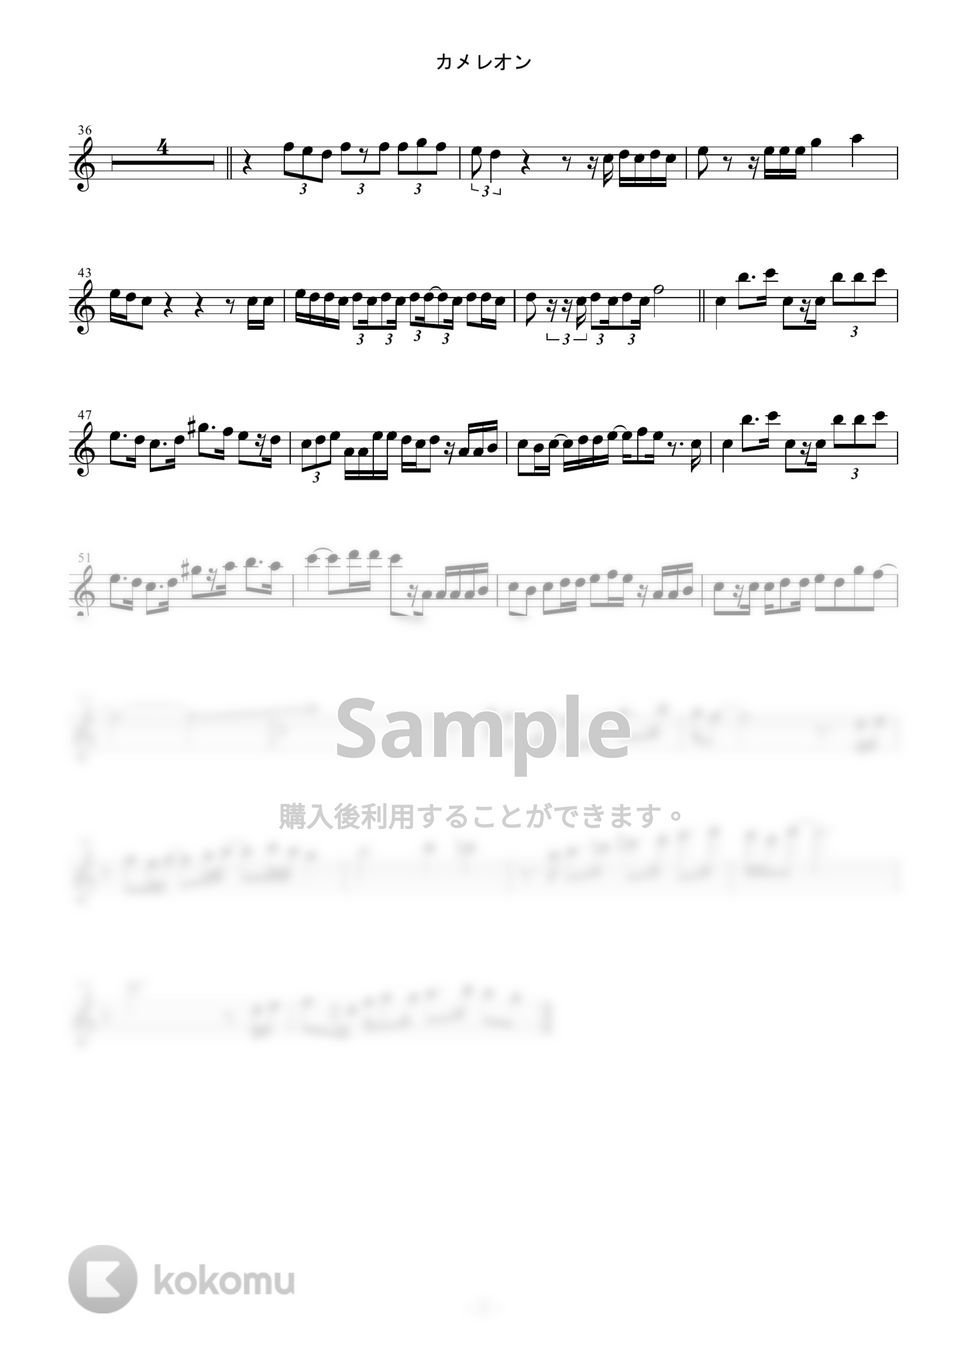 King Gnu - カメレオン (フルート/オーボエ/in C/ヴァイオリン/メロディー譜) by enorisa